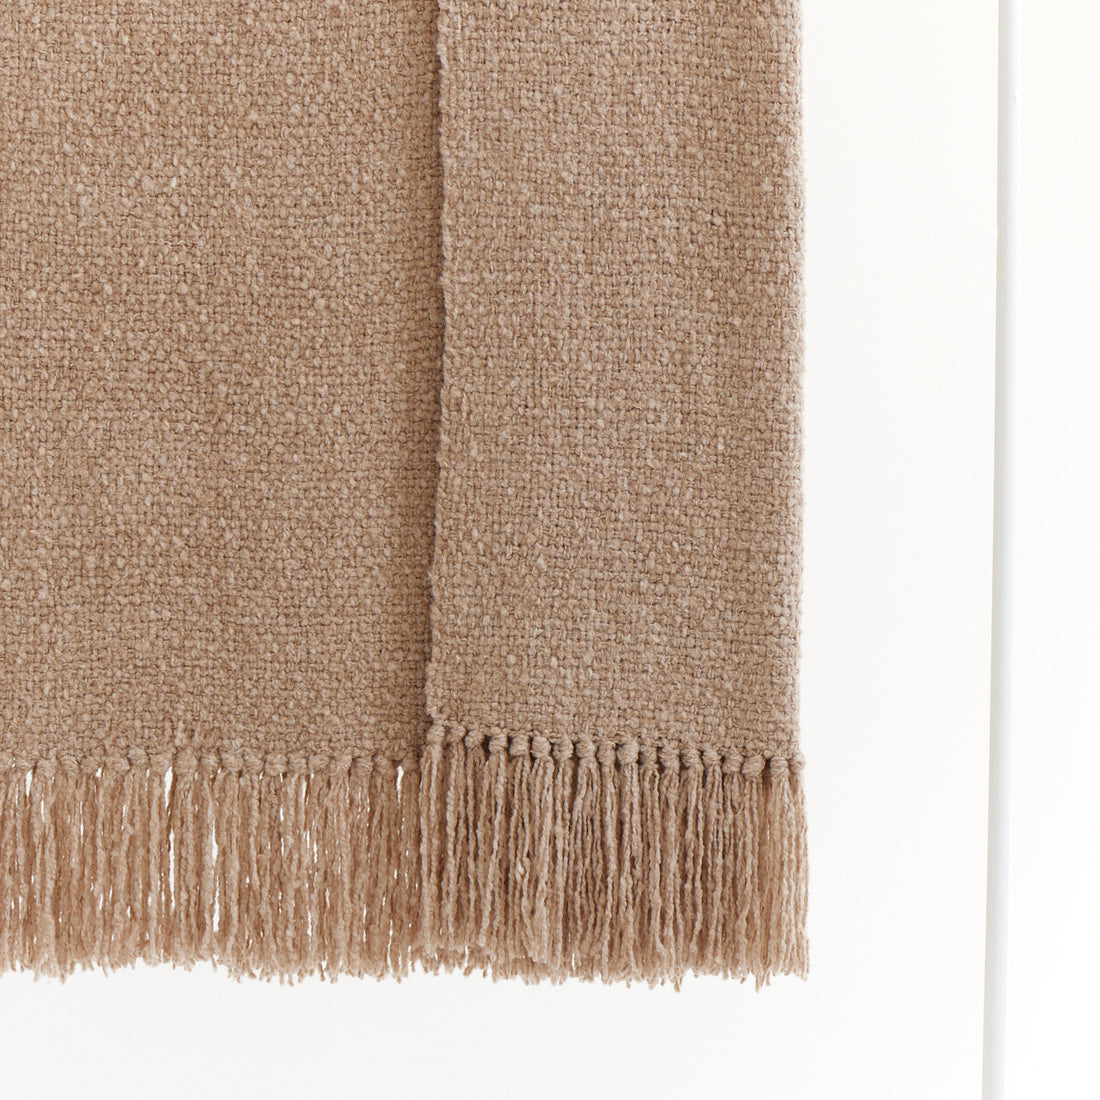 Handwoven Merino Wool Luxury Blankets and Cushions – Texturable